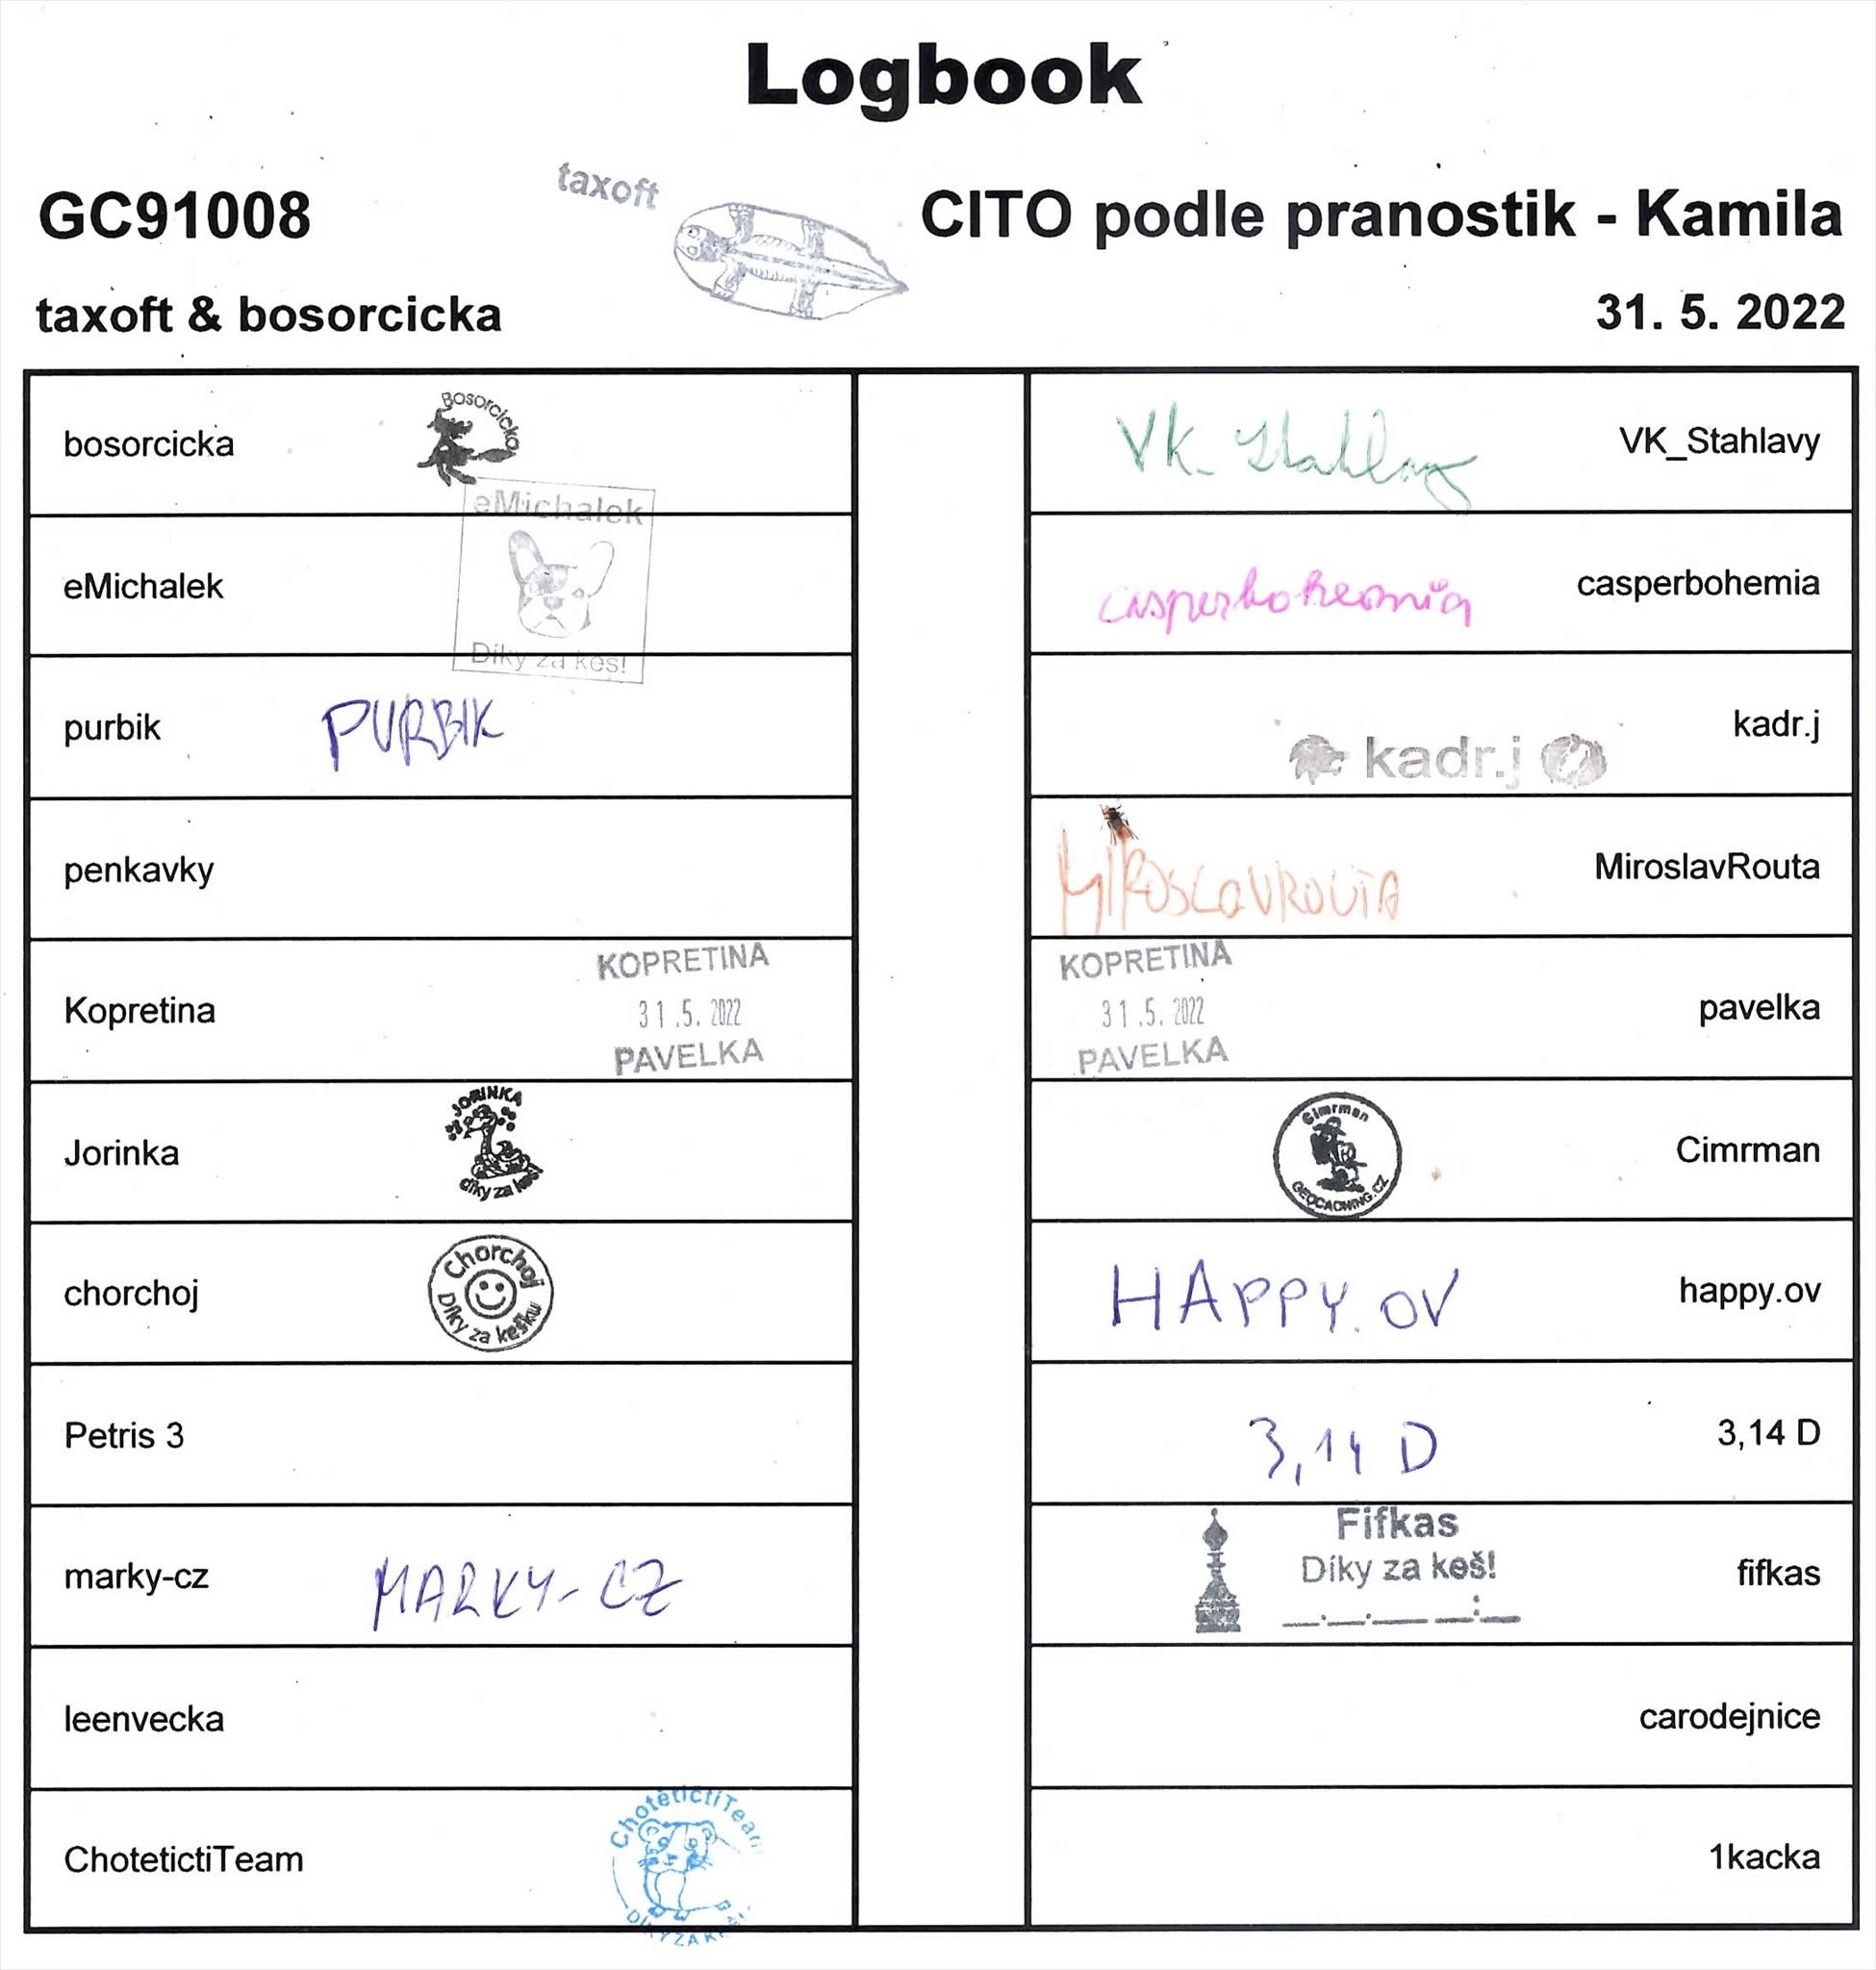 GC91008 - CITO podle pranostik - Kamila - logbook